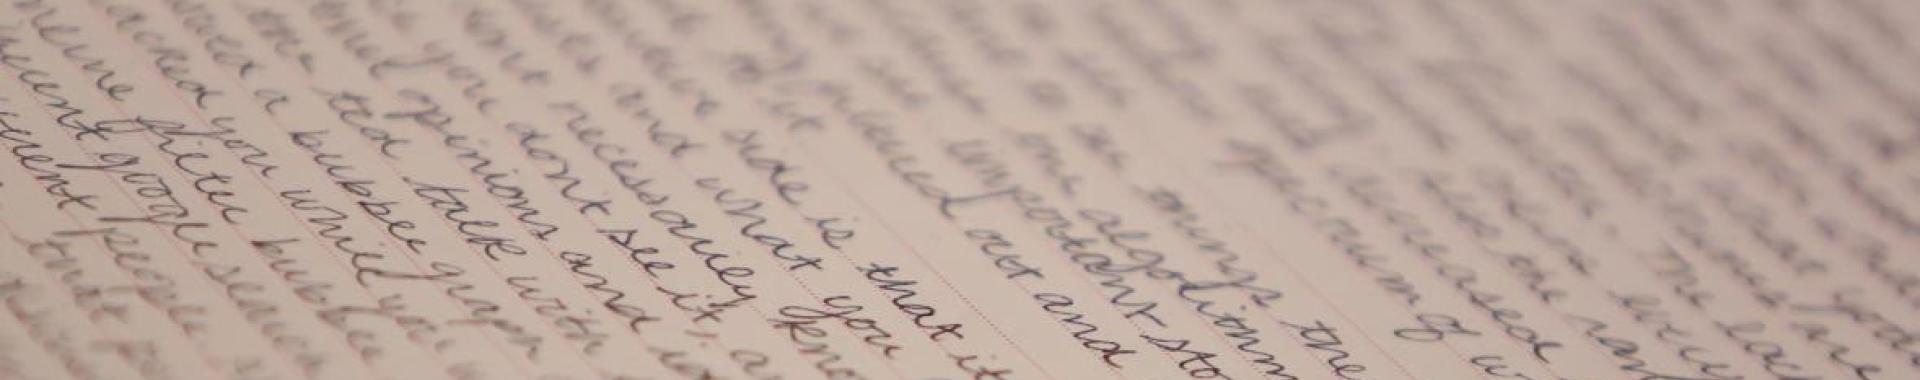 Handwriting on line paper.